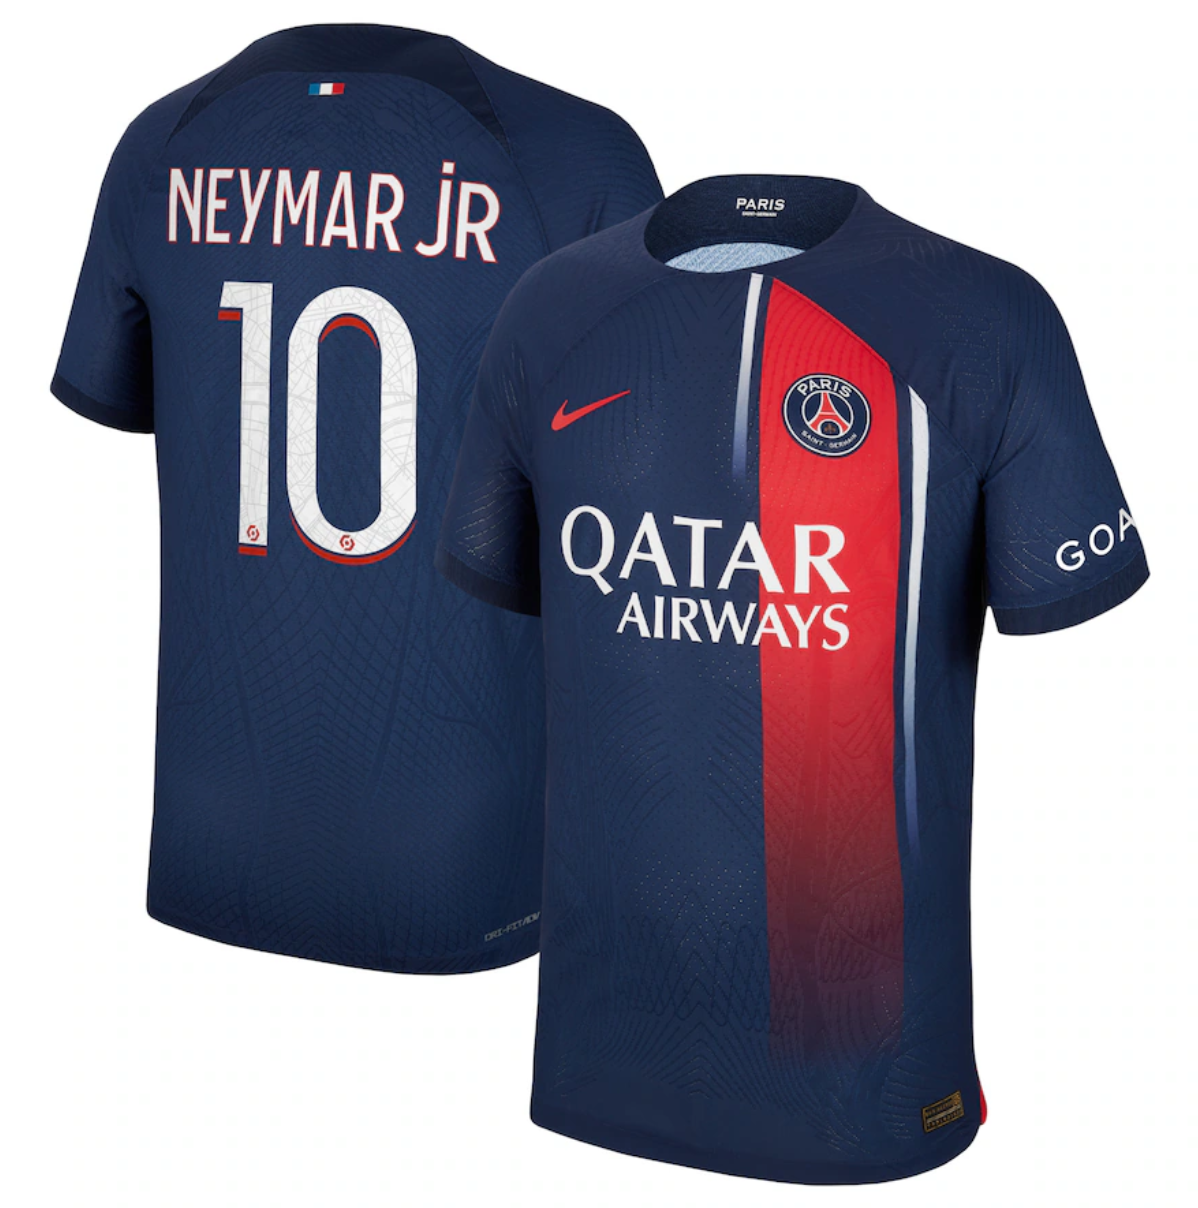 Men's Paris Saint-Germain #10 Neymar Jr Navy Soccer Jersey